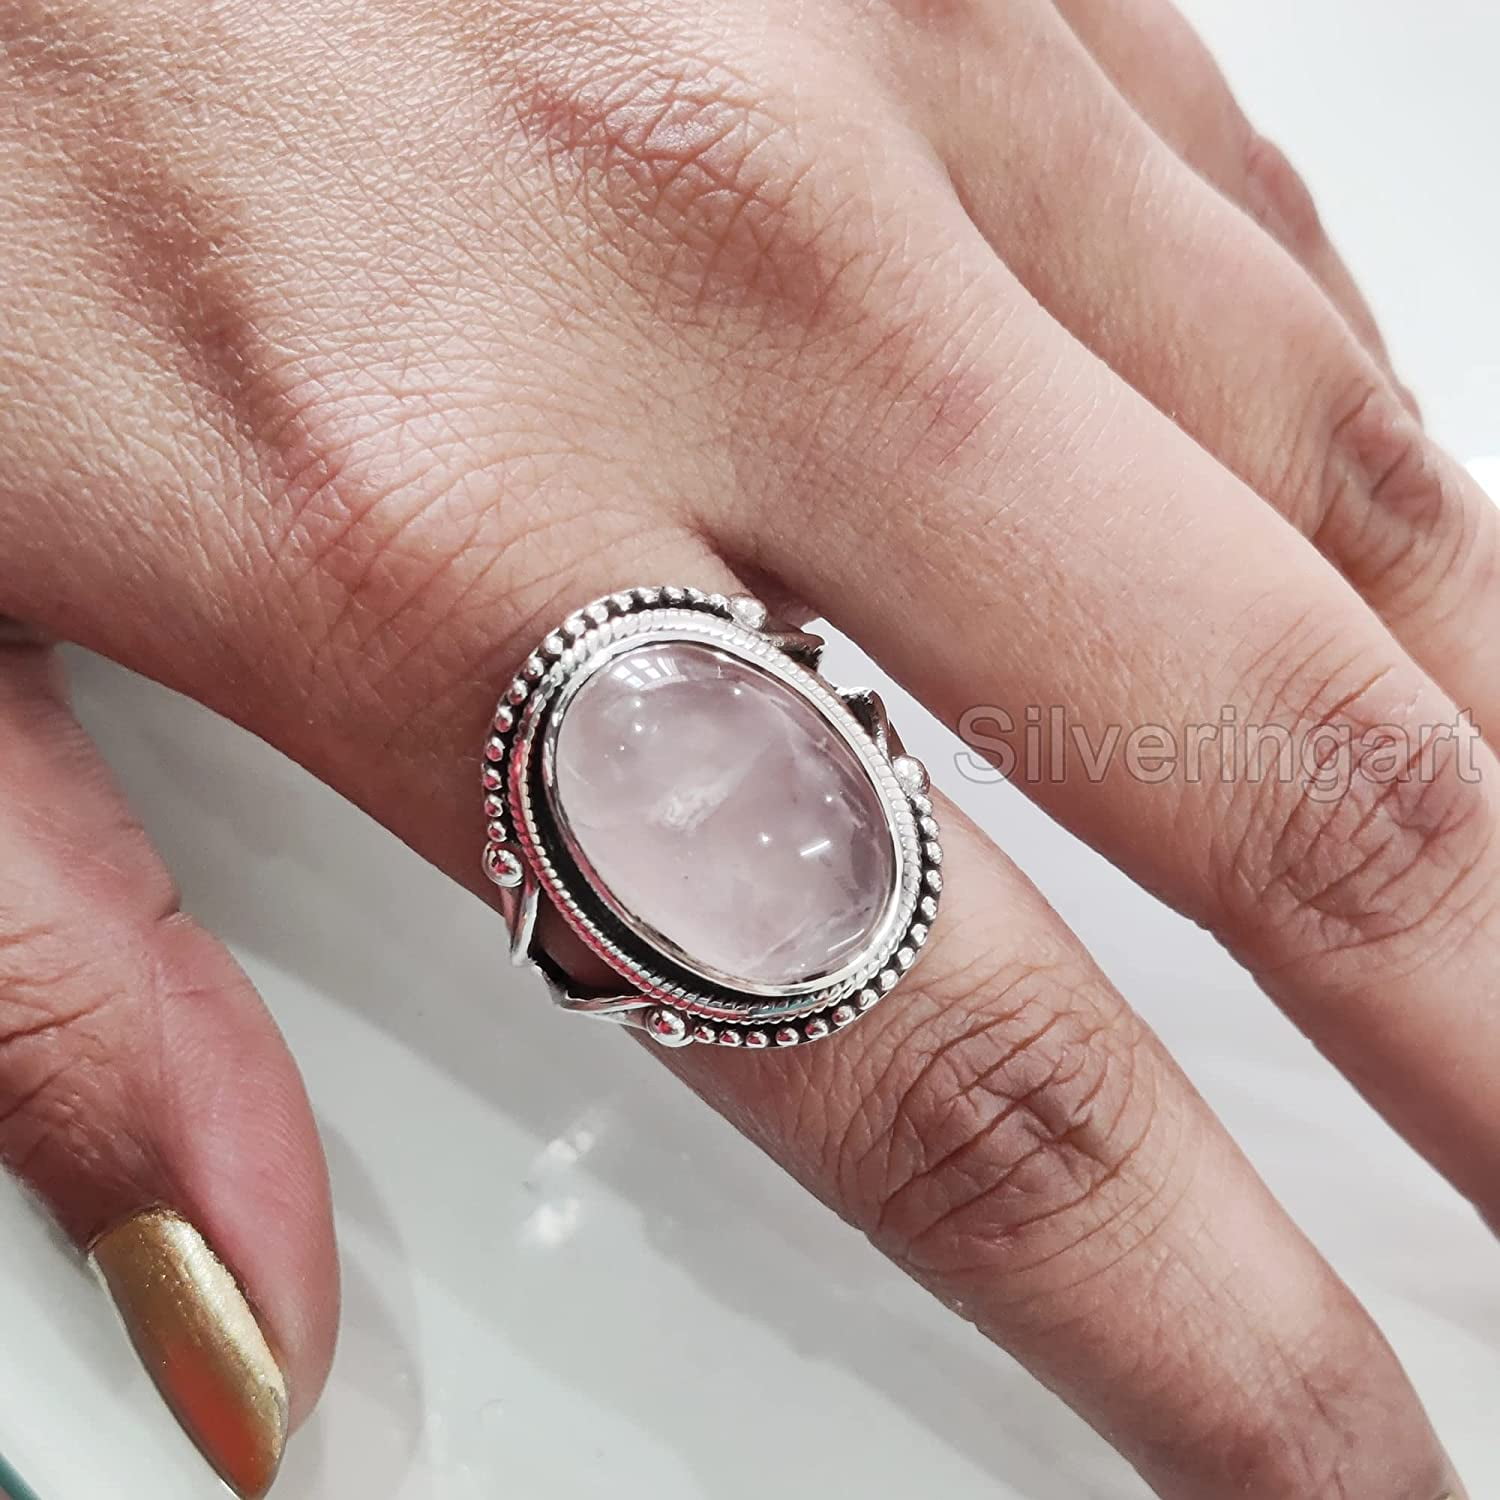 Buy Rose quartz ring, Pink ring, Sterling silver gemstone ring online at  aStudio1980.com